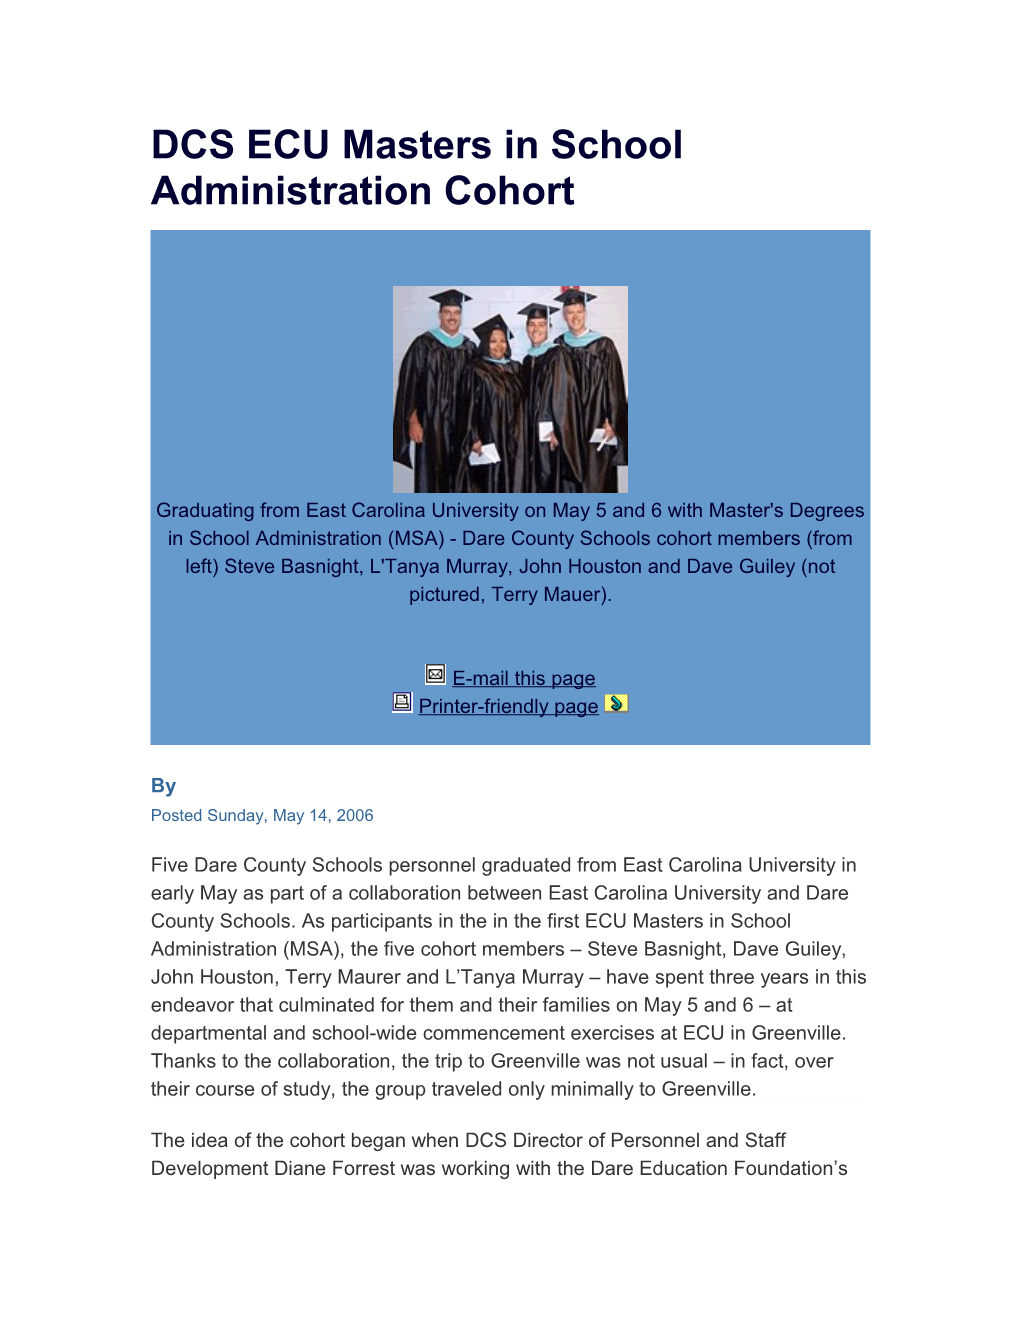 DCS ECU Masters in School Administration Cohort